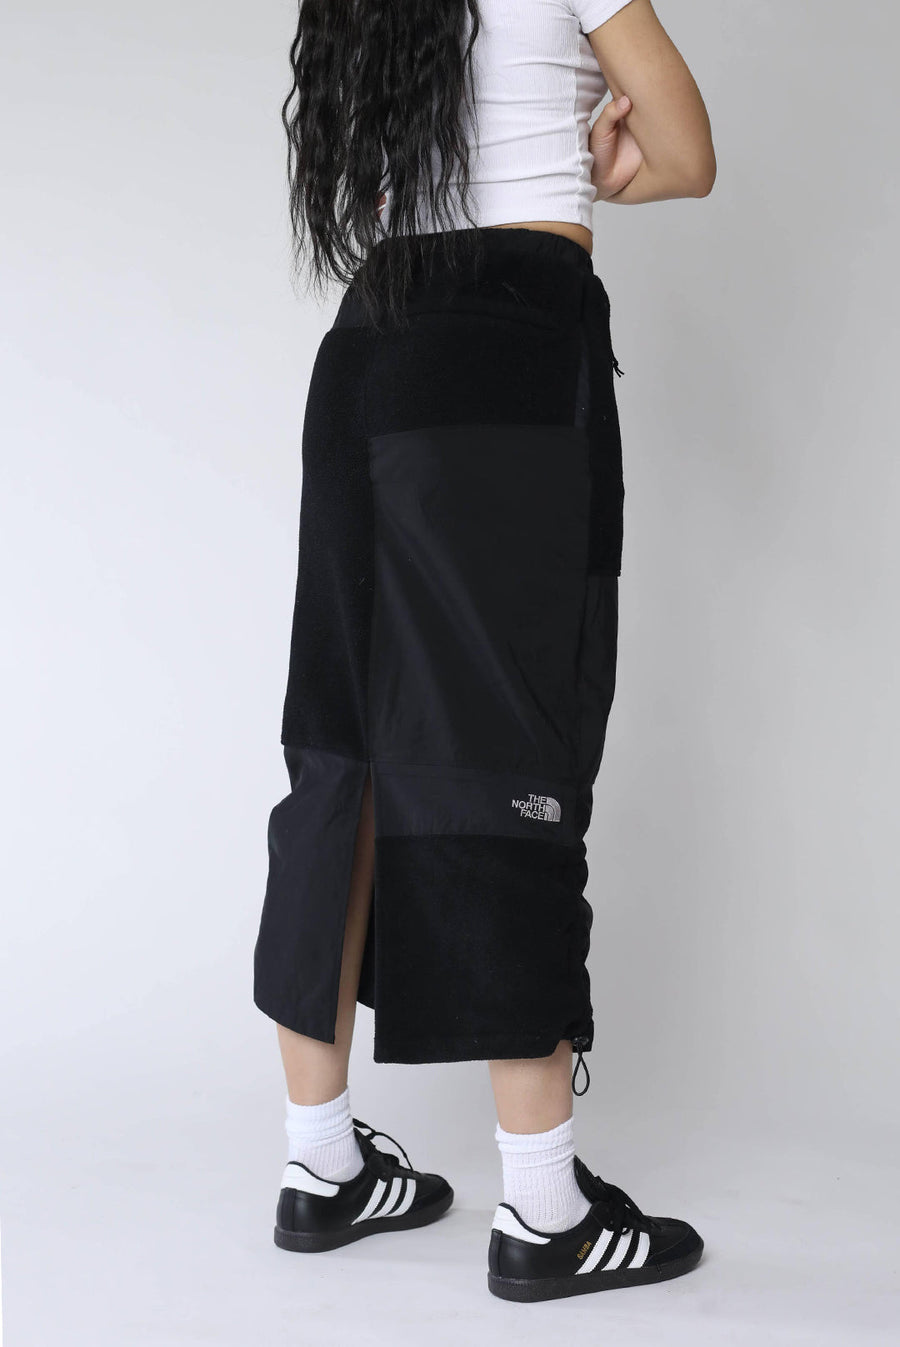 Rework North Face Fleece Midi Skirt